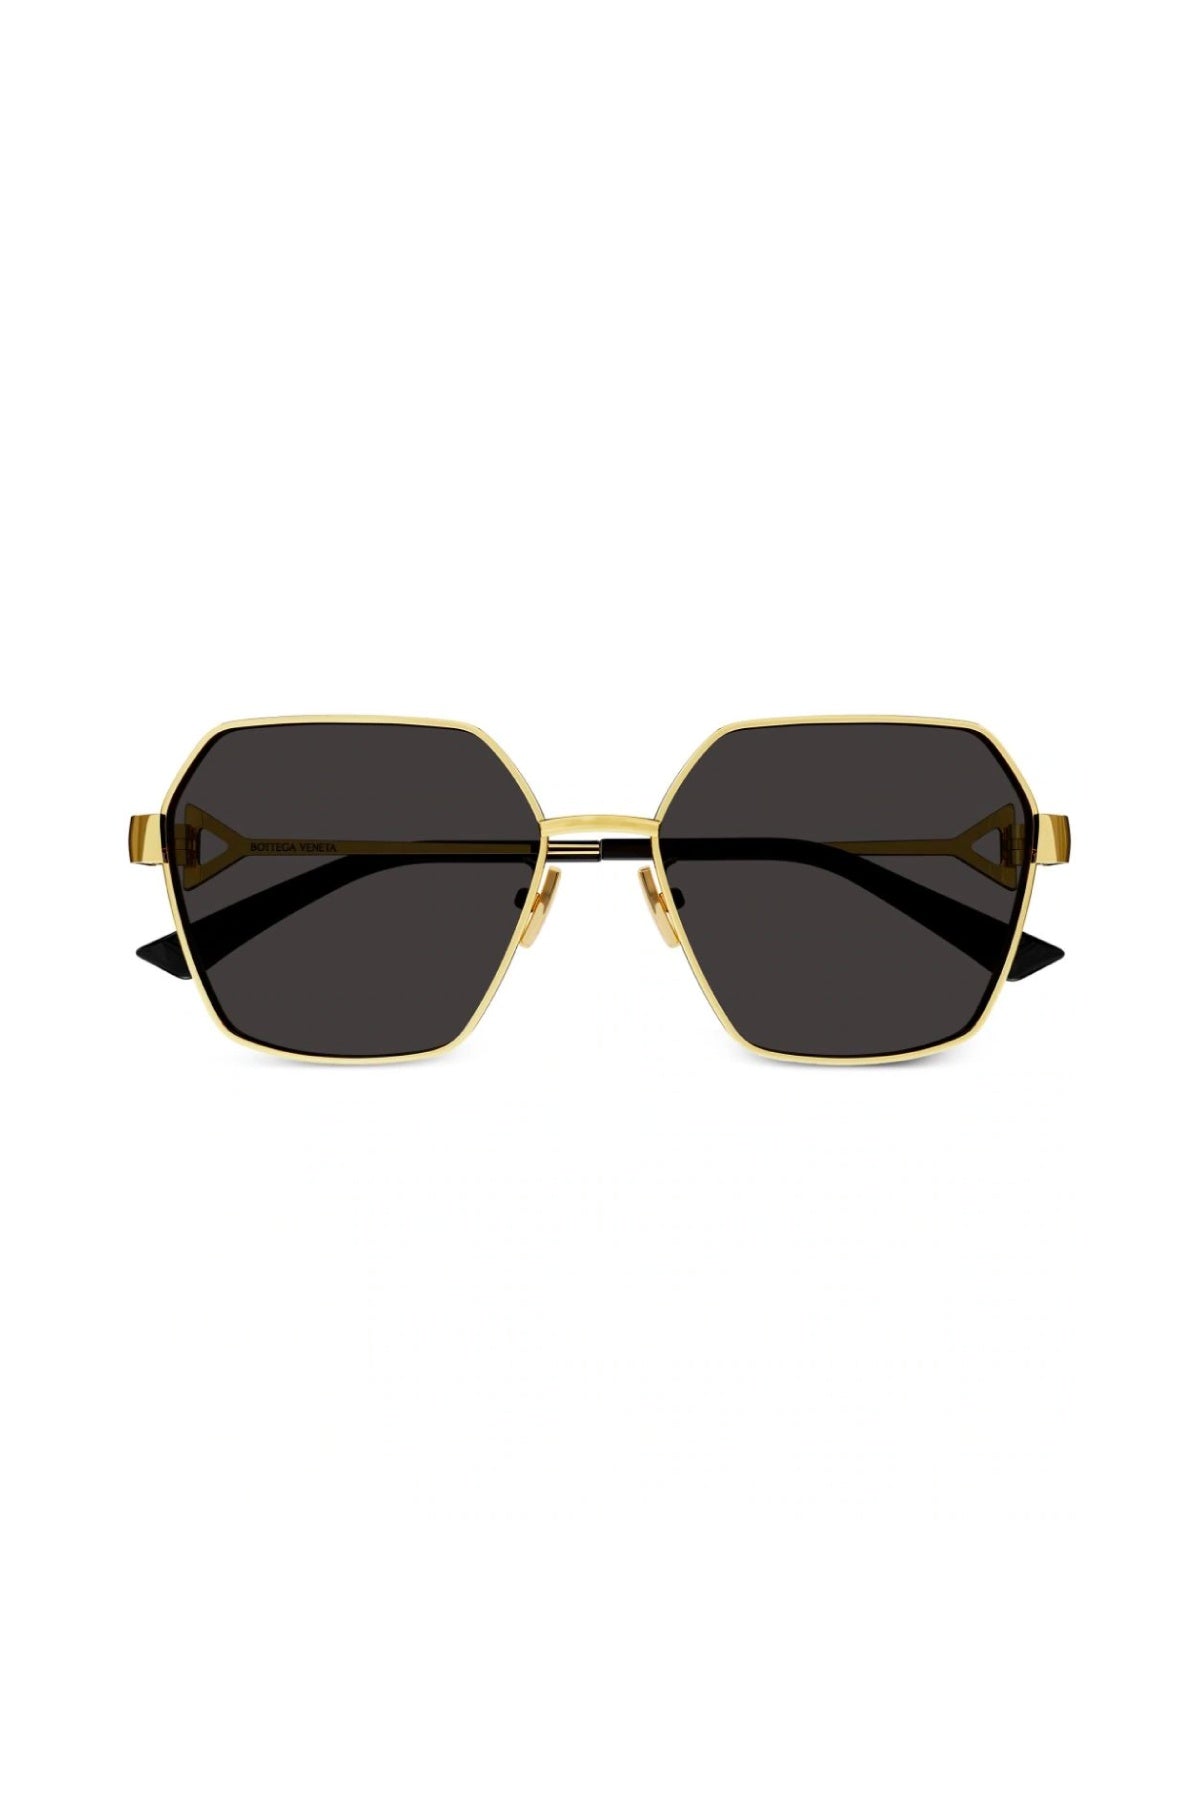 Bottega Veneta Hexagonal Aviator Sunglasses - Gold/ Black